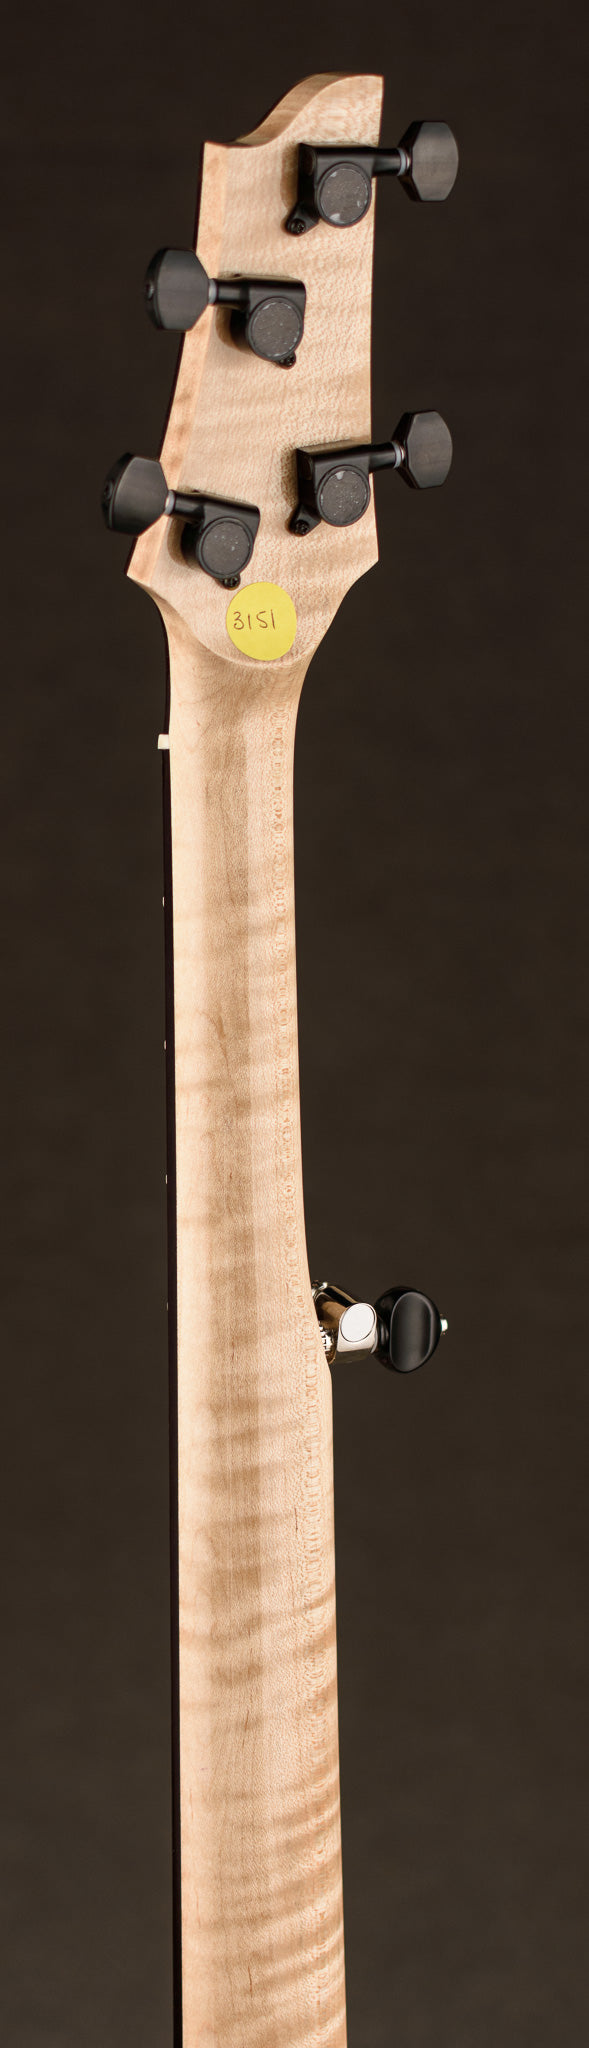 Nechville Hybrid Open Back w/ Press-on Resonator Banjo